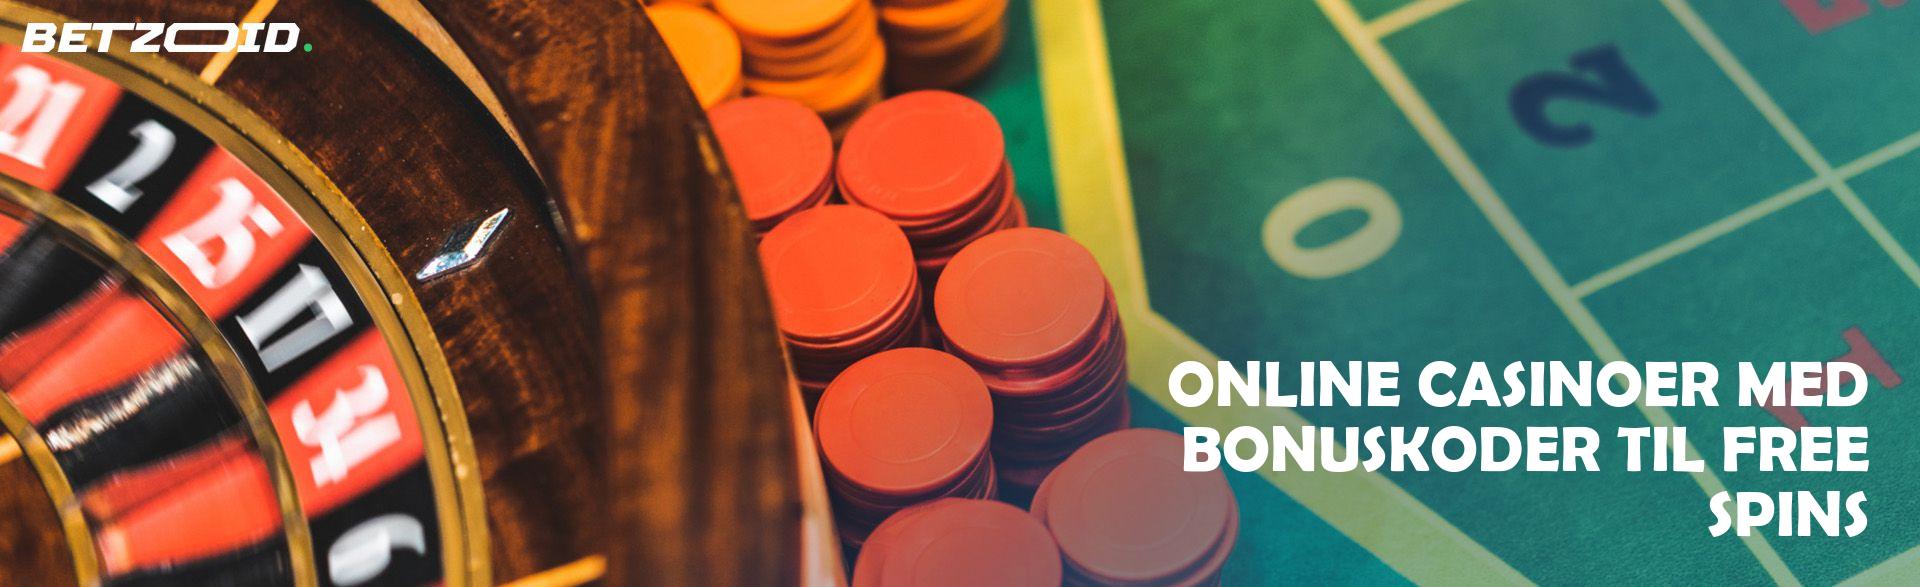 Online Casinoer med Bonuskoder Til Free Spins.